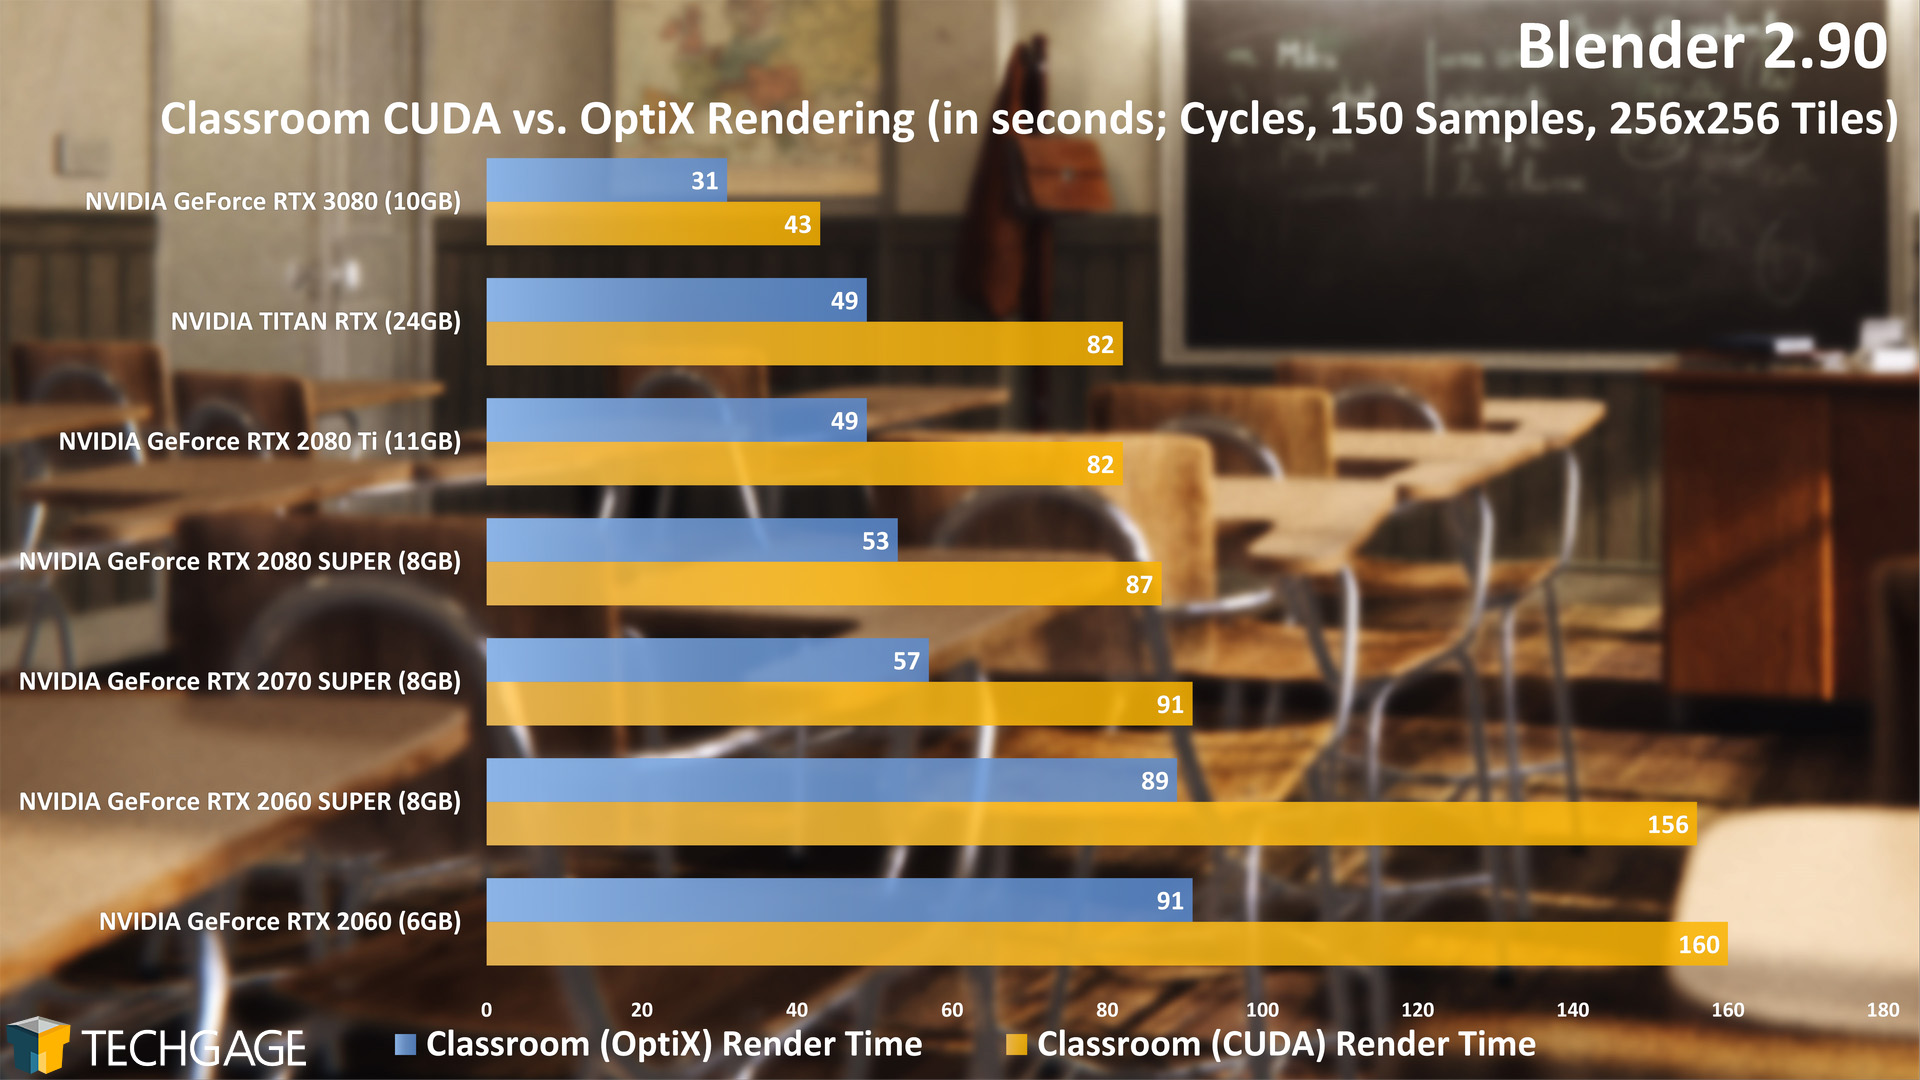 Blender-2.90-Classroom-CUDA-and-OptiX-Render-Time-Cycles-NVIDIA-GeForce-RTX-3080.jpg